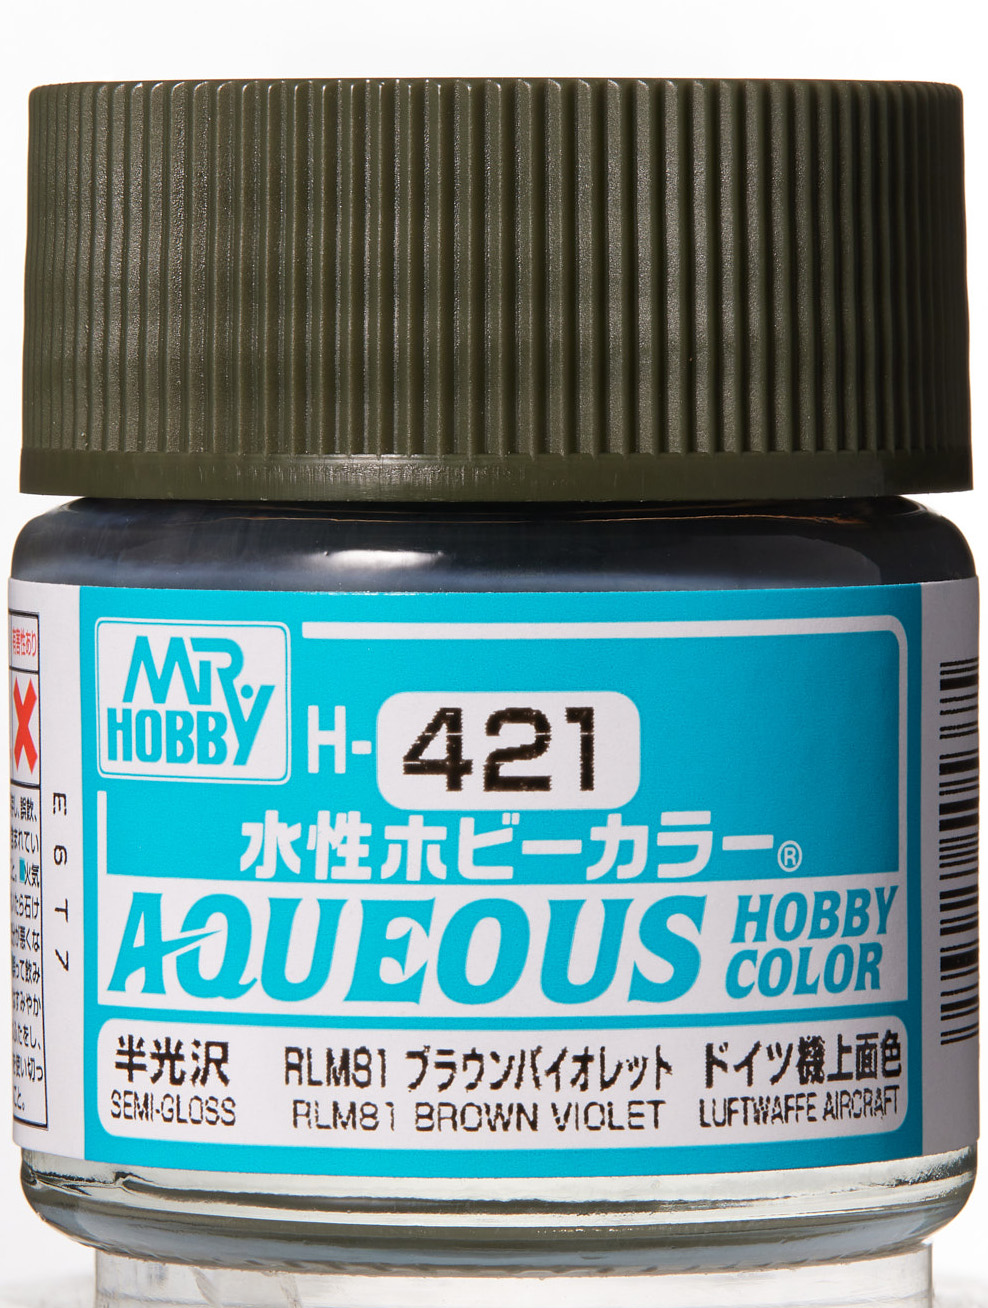 Mr. Aqueous Hobby Color - RLM81 Brown Violet - H421 - RLM81 Braunviolett